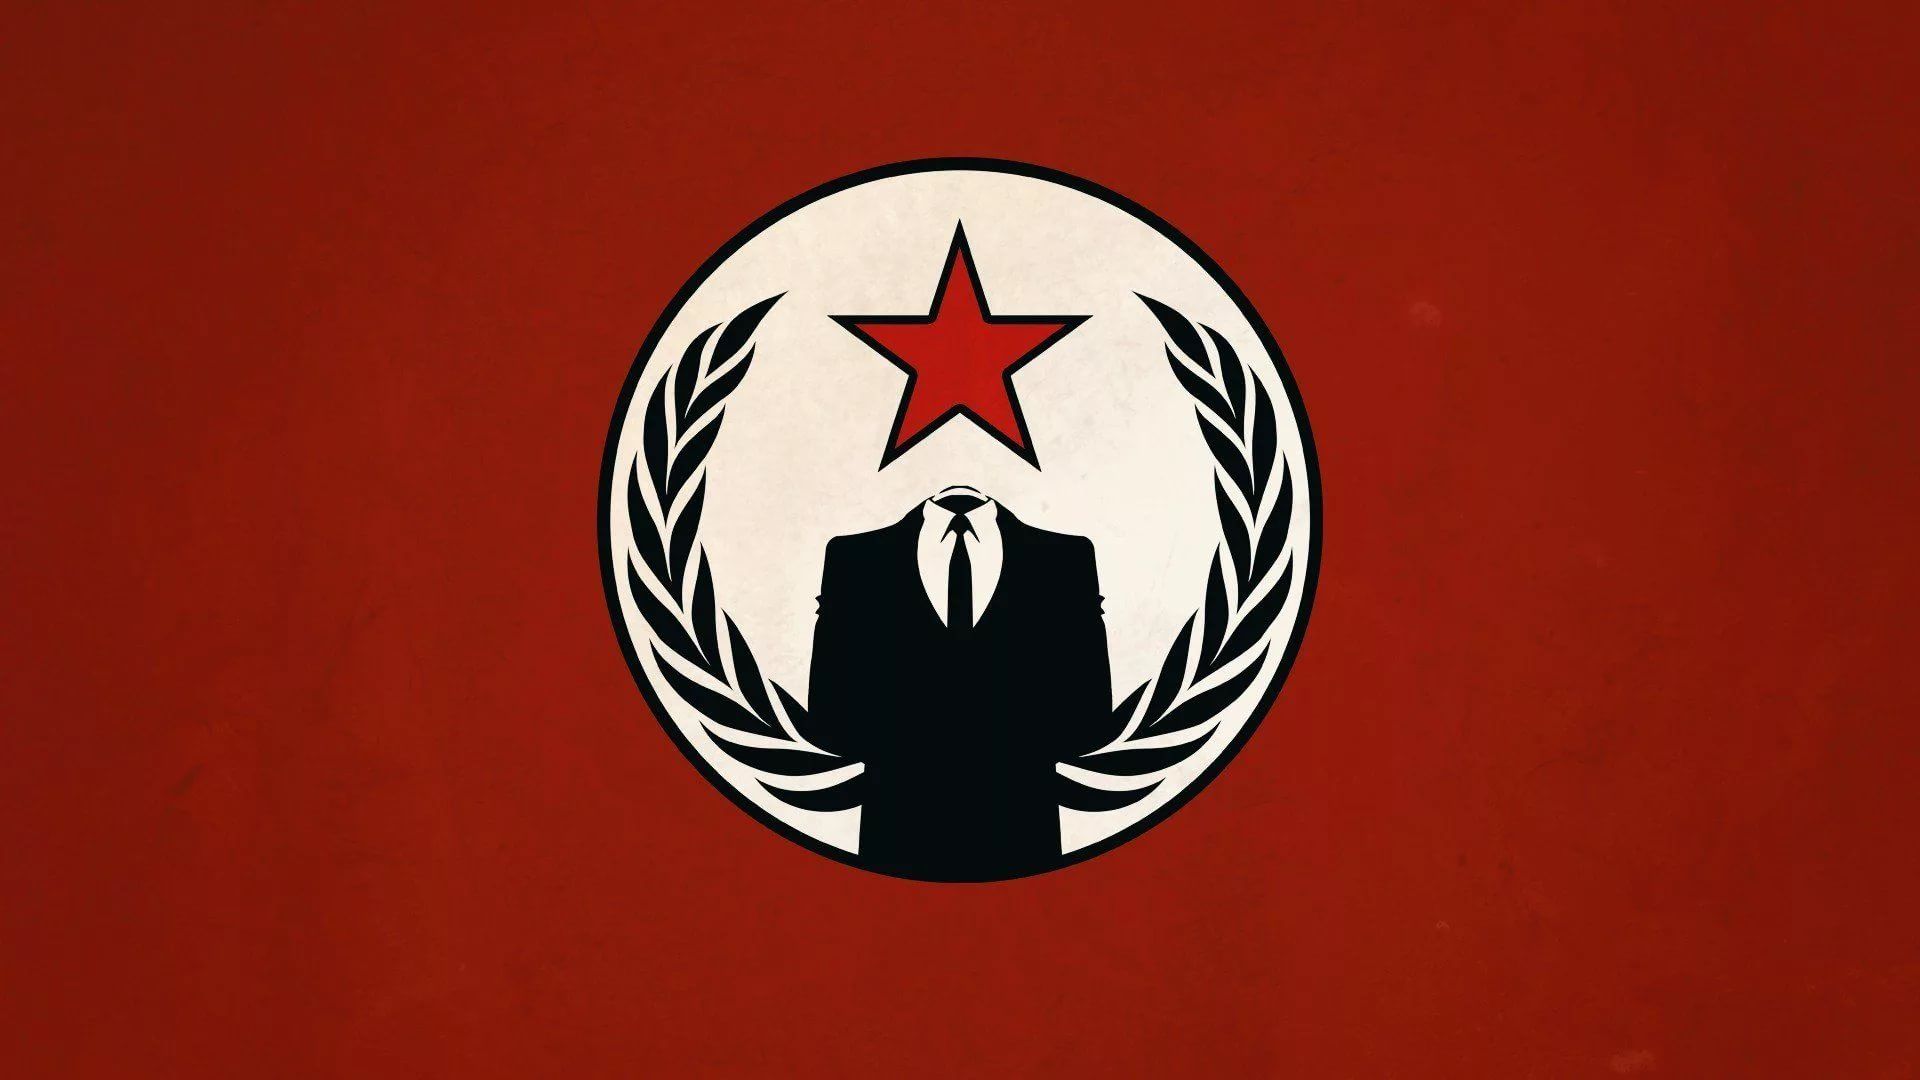 Communism wallpaper image